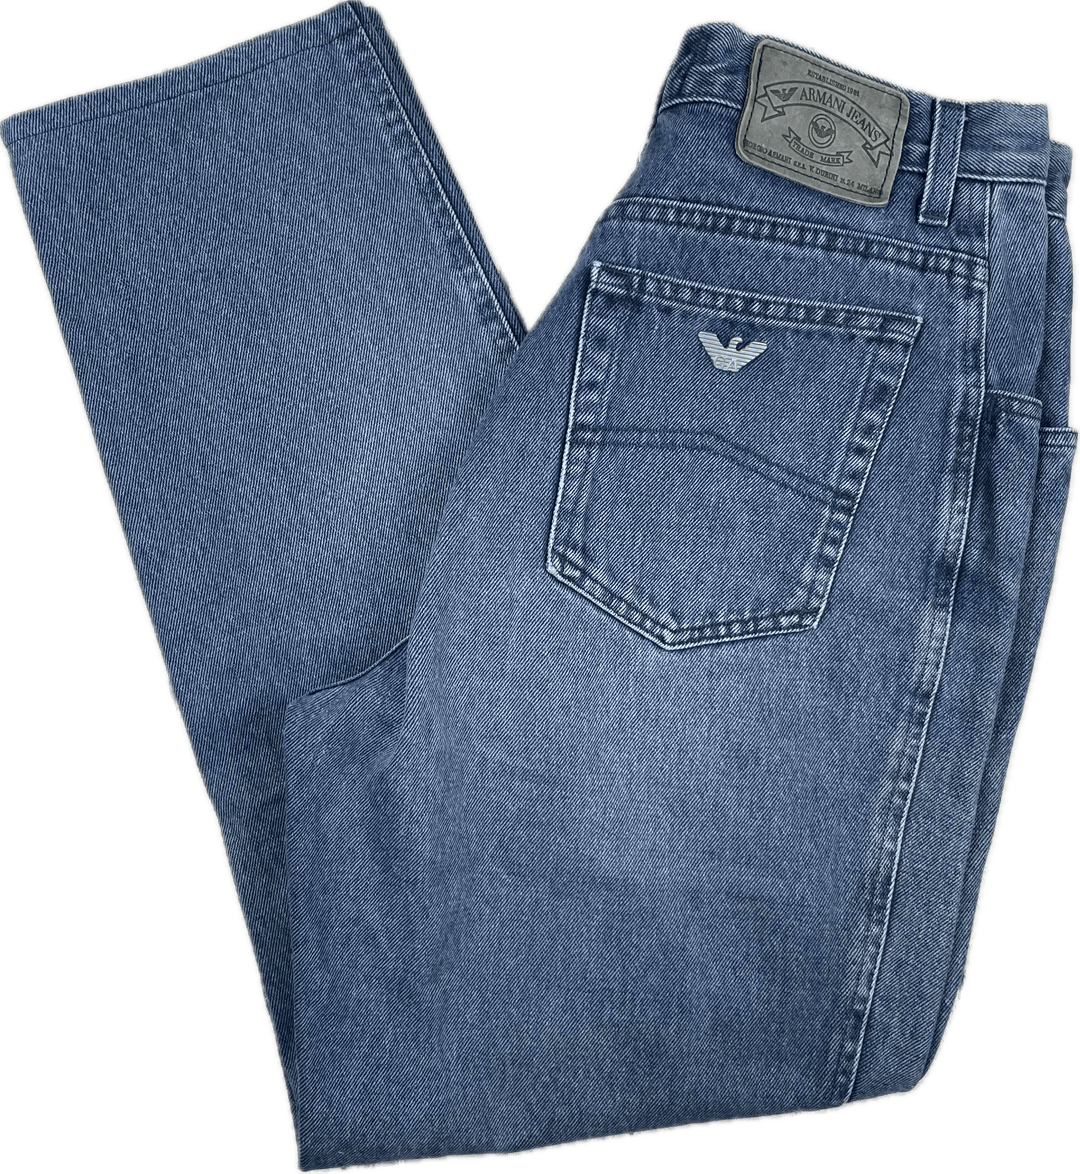 Armani Jeans Vintage Denim Jeans 80's-90's- Size 32 - Jean Pool